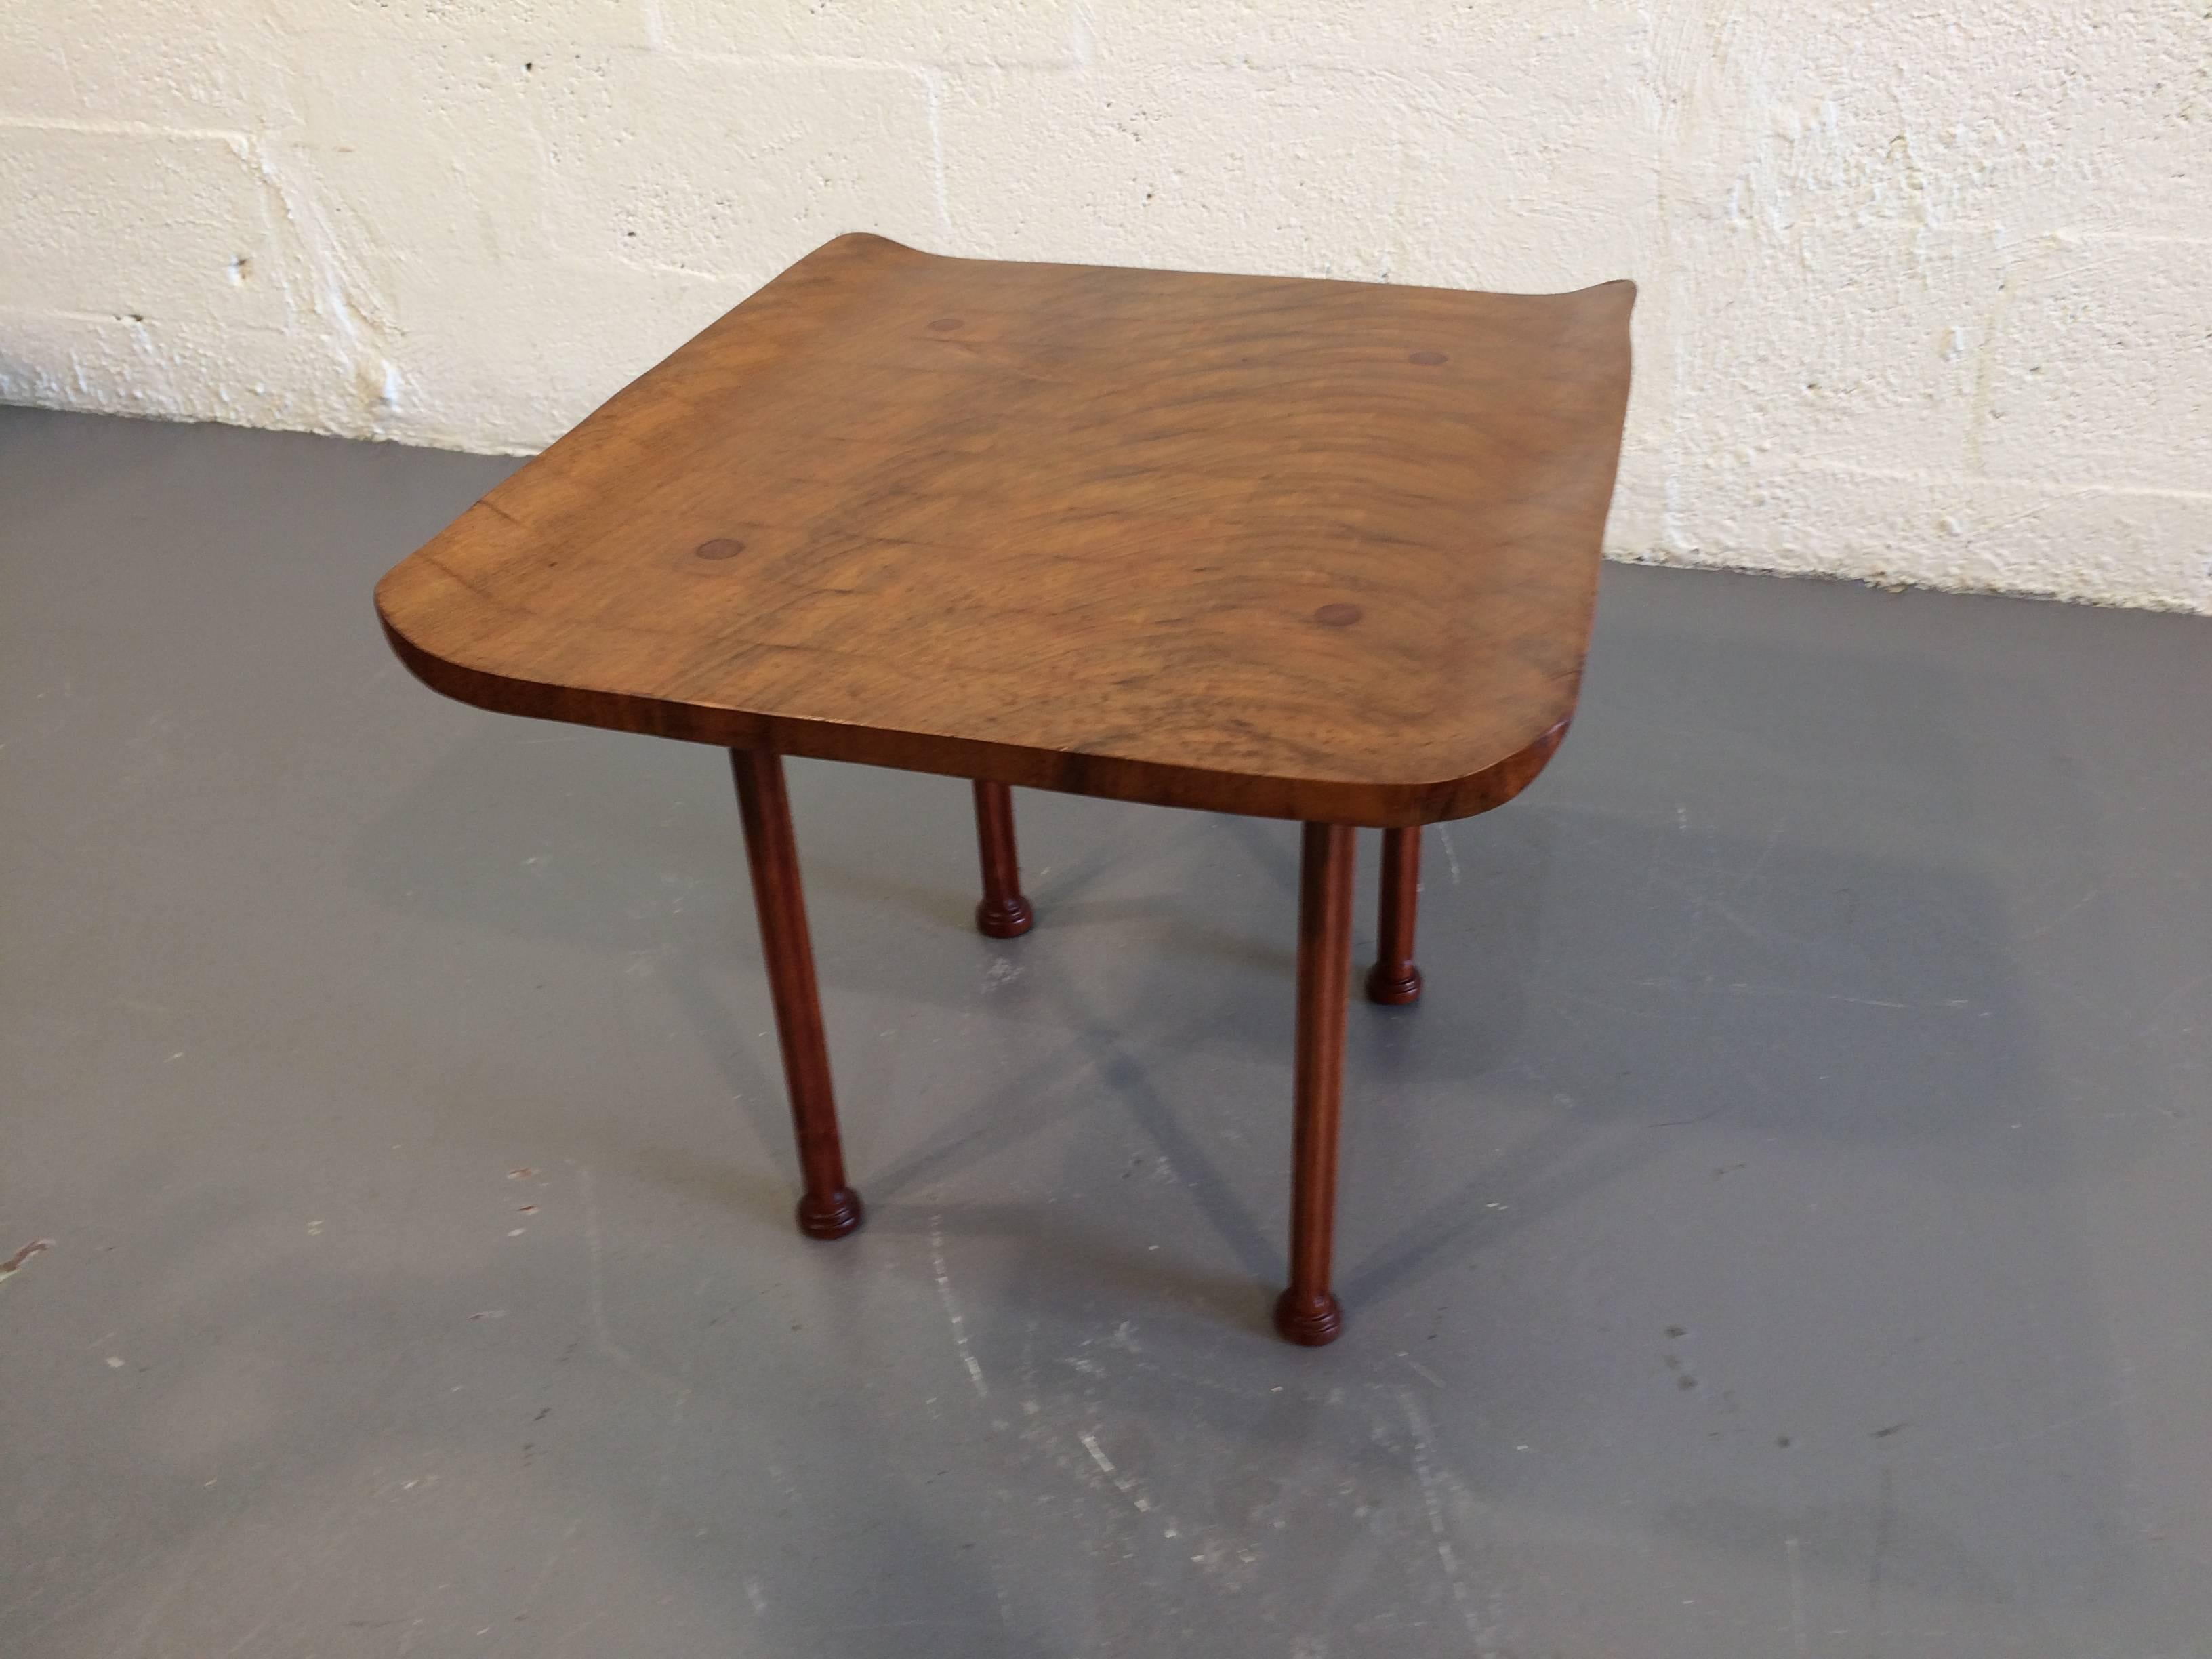 Artist Craftsman Side Table Freeform, Wood, Brown 1